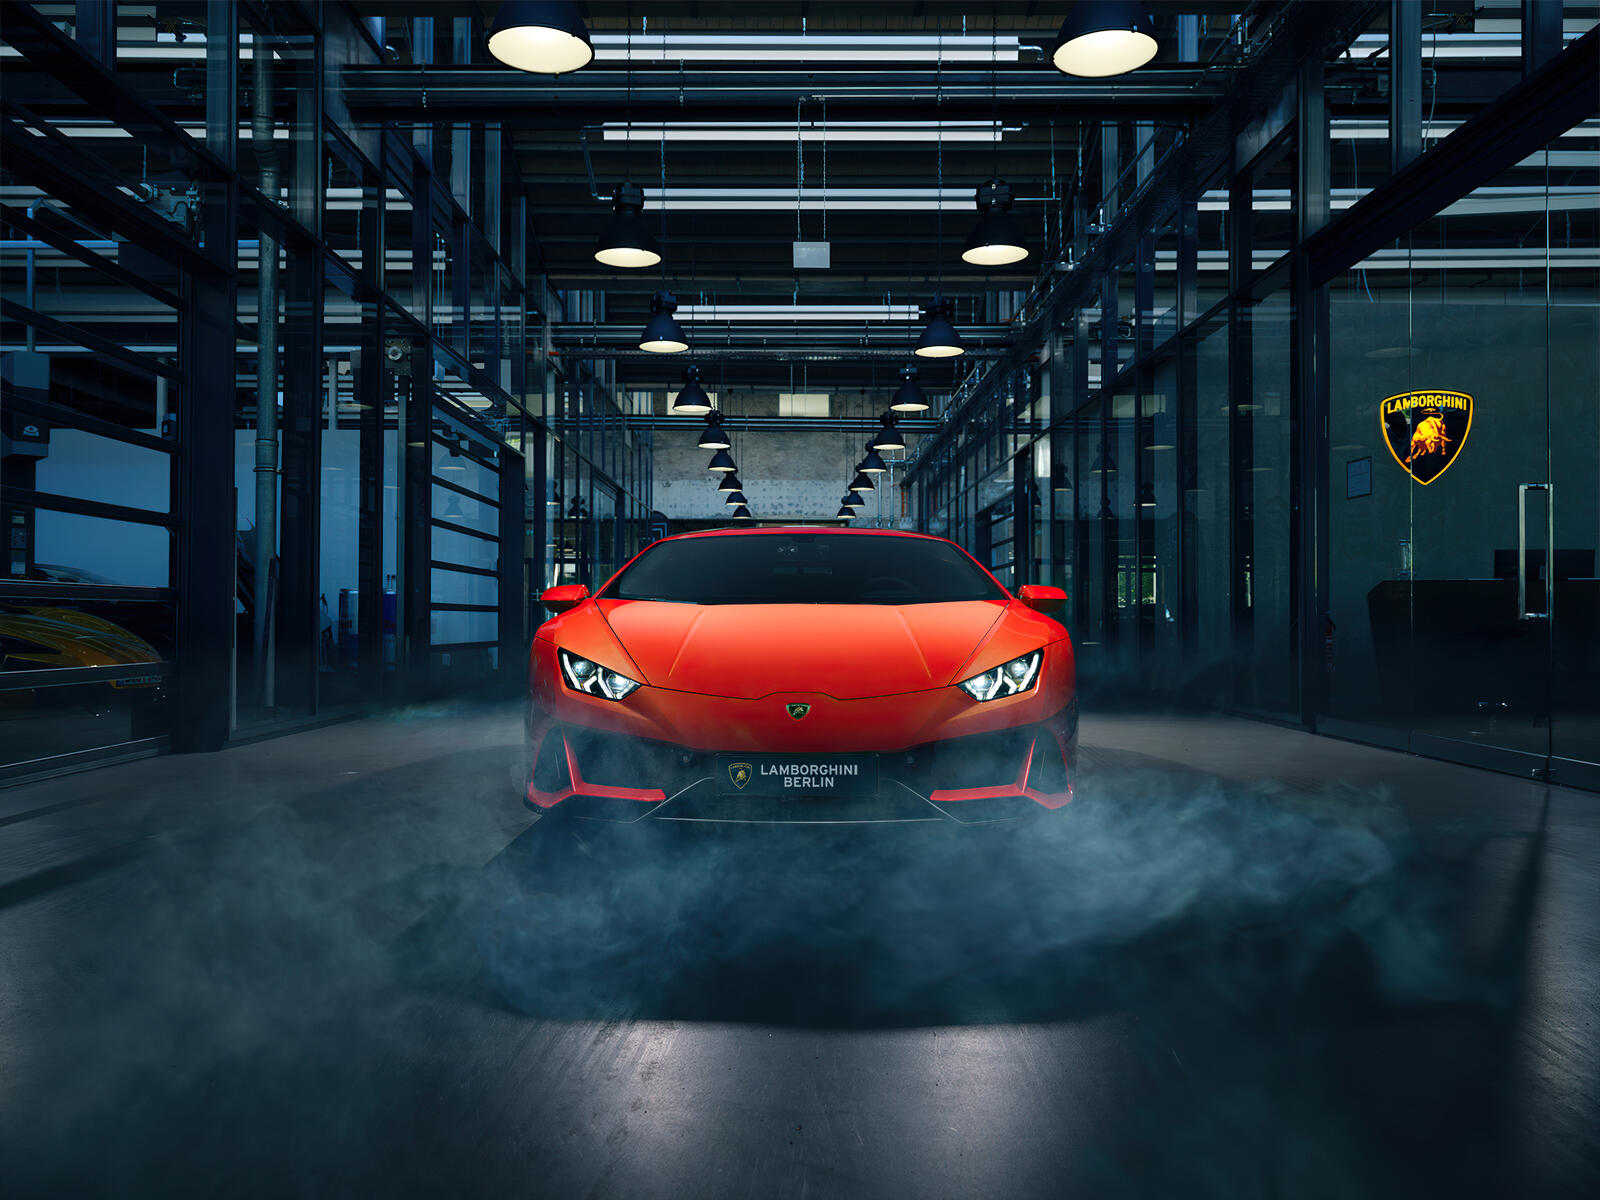 Free photo A red Lamborghini in a smoky room.